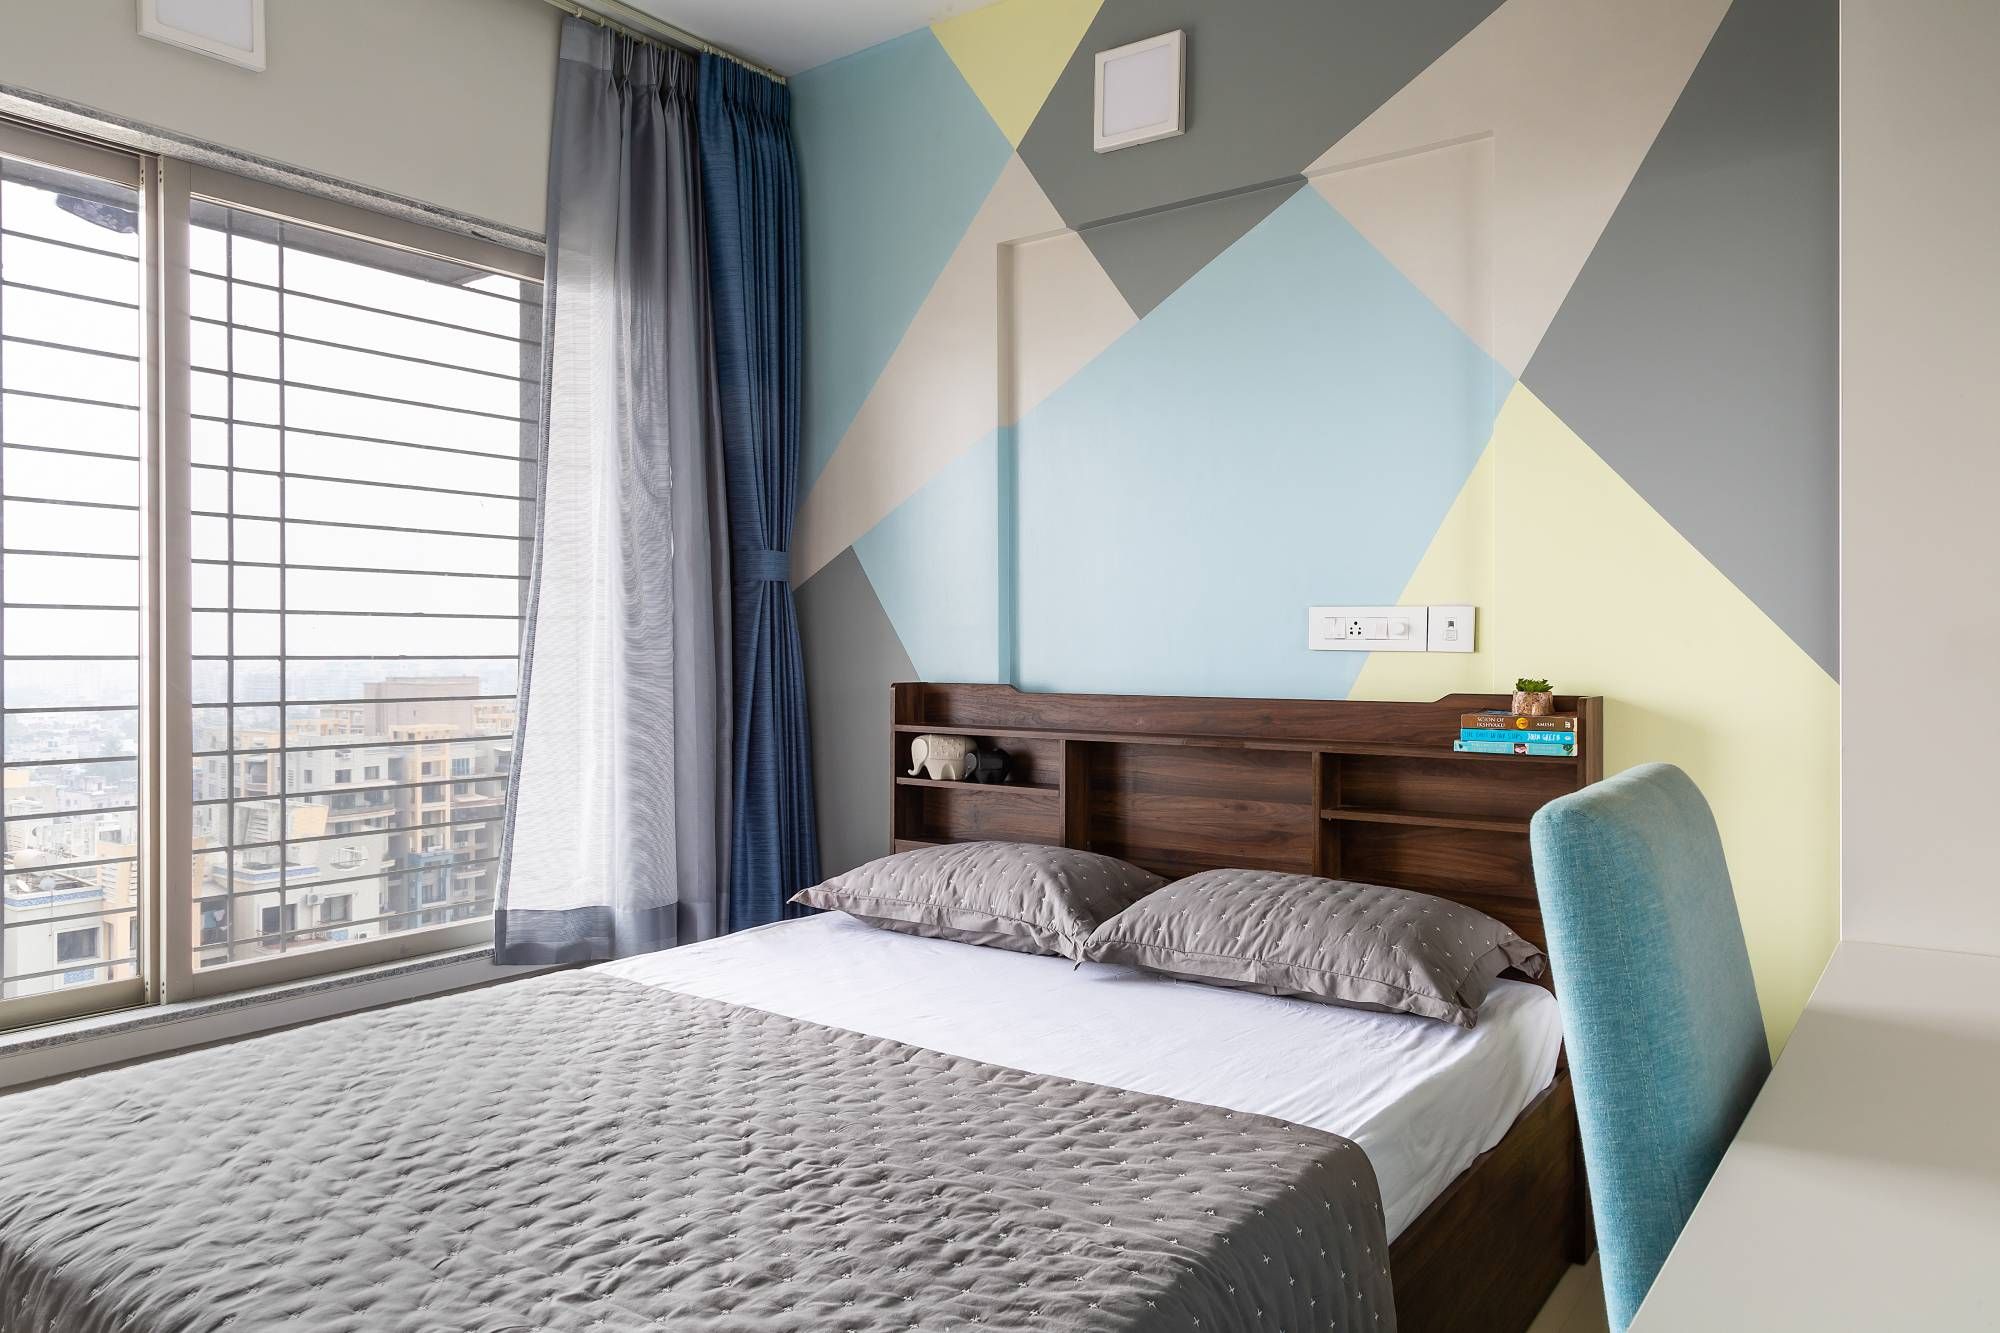 Modern Kids Room Design With Queen Size Bed With Inbuilt Storage Shelves